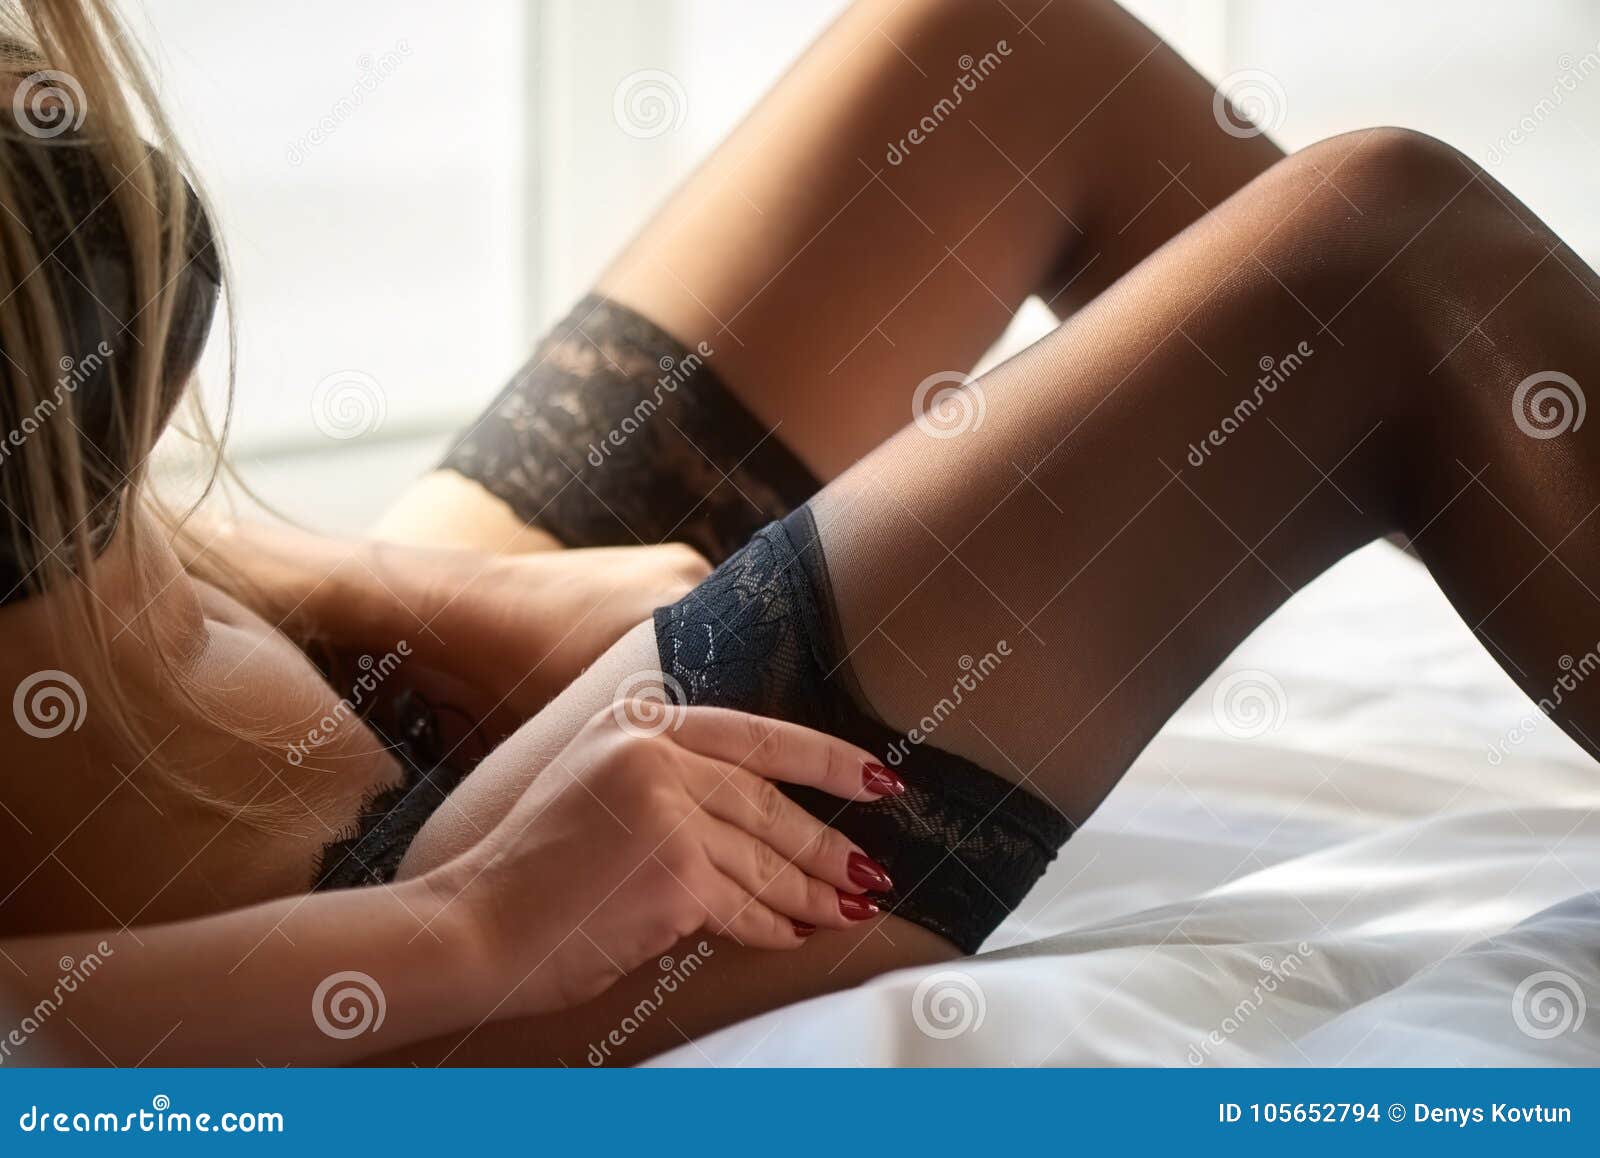 Mature lady stockings